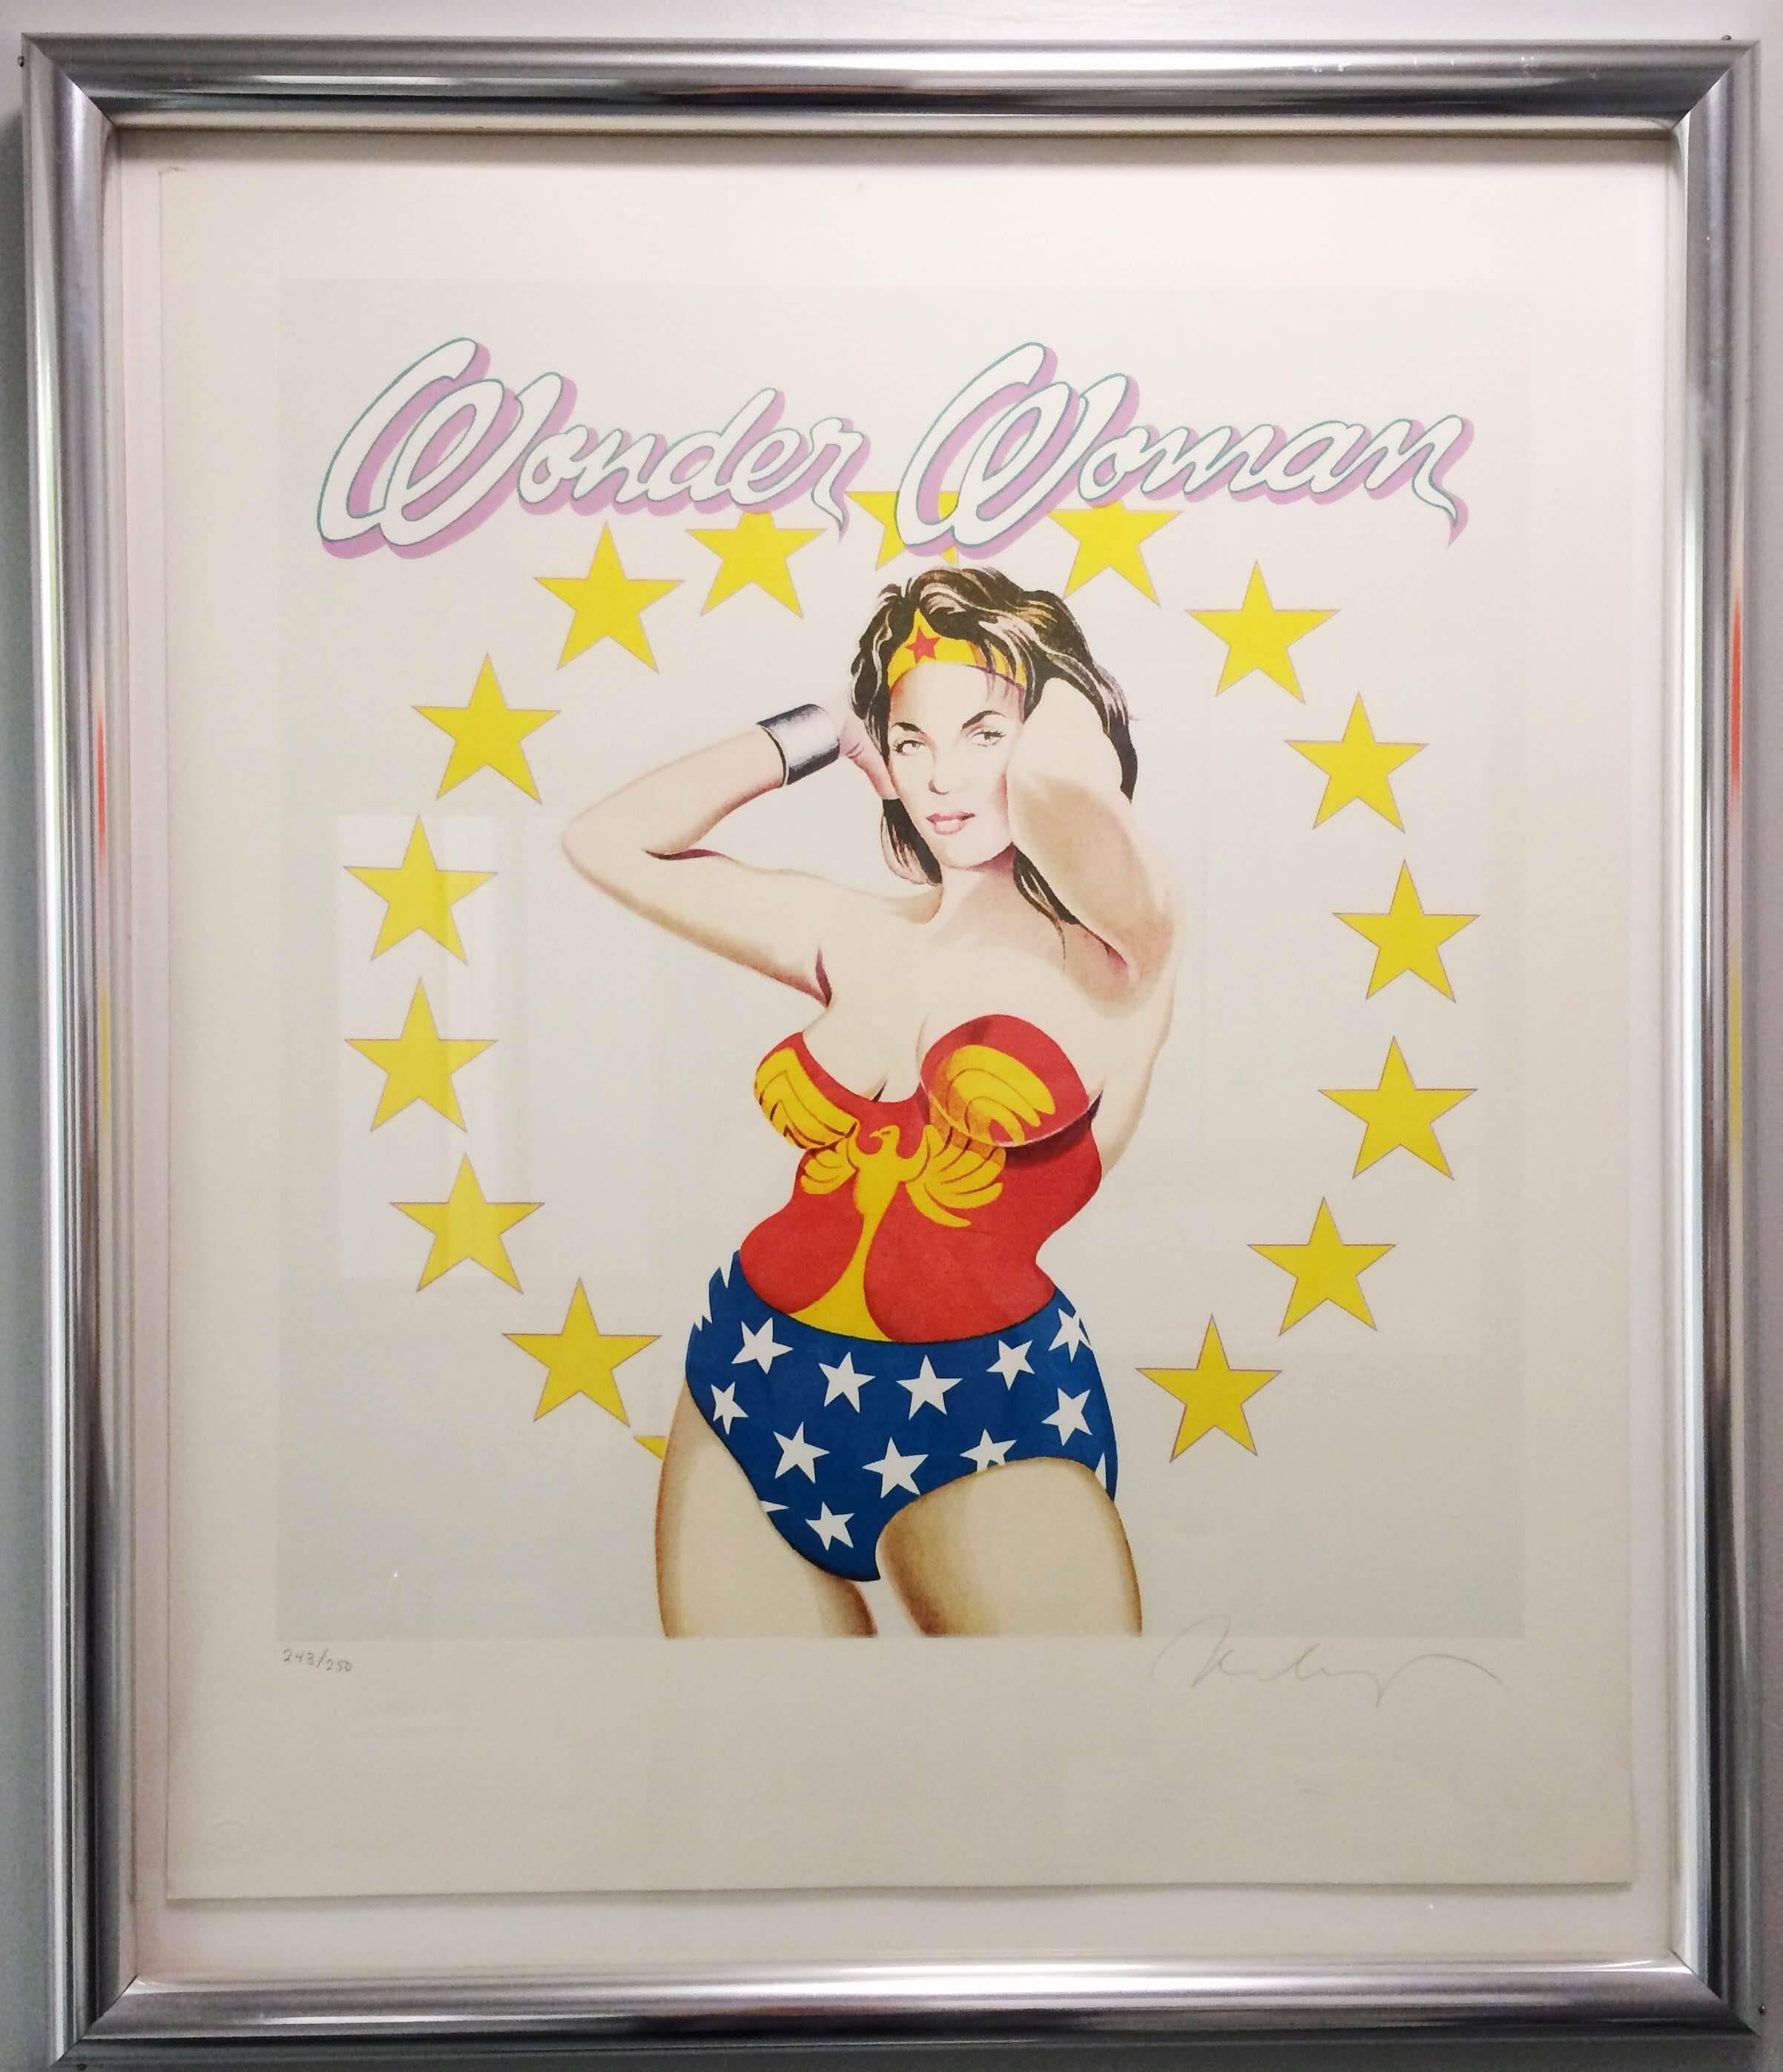 Wonder Woman - Pop Art Print by Mel Ramos